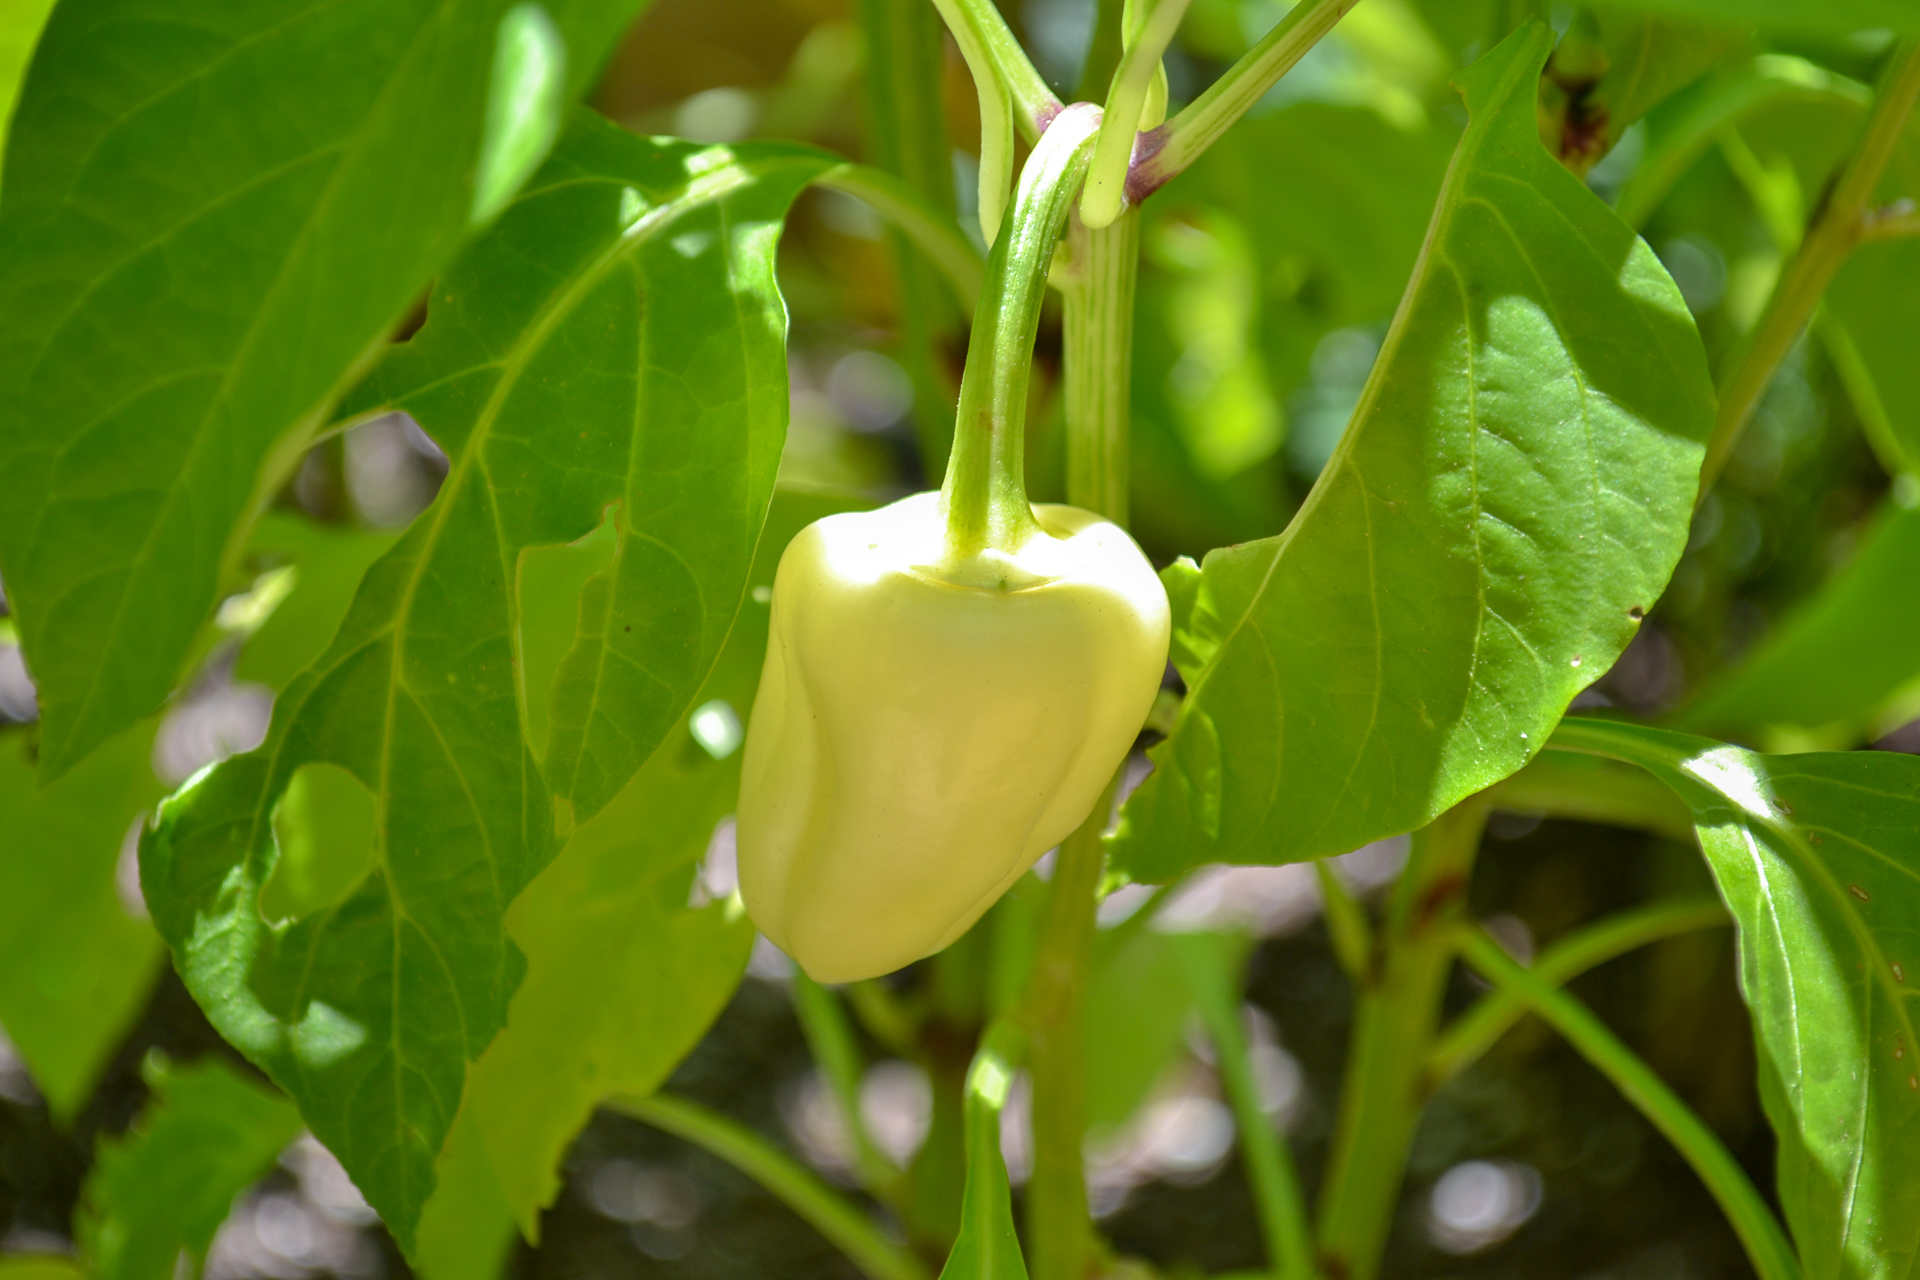 bell pepper growing in